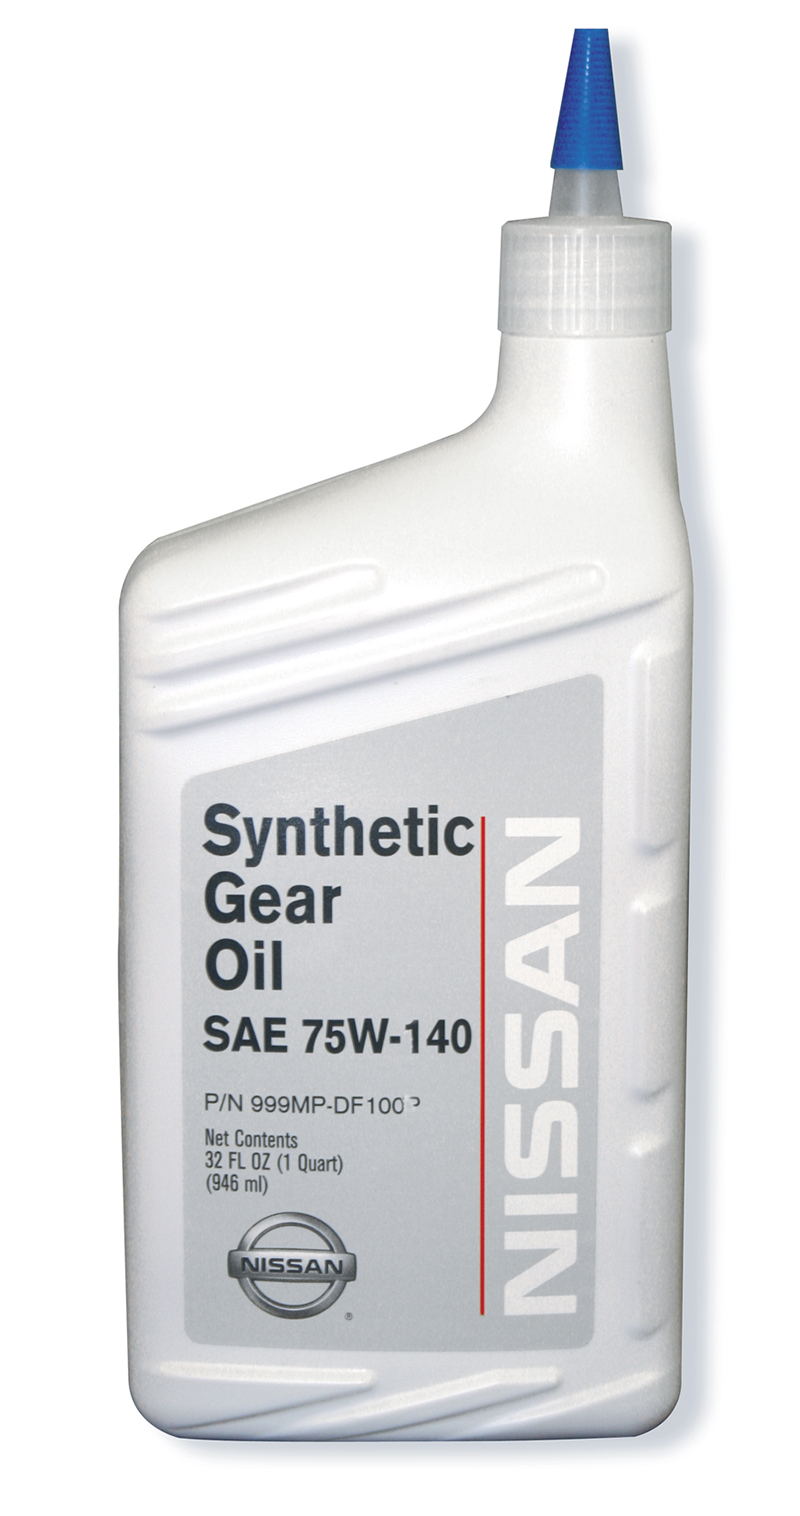 Nissan Genuine Synthetic Gear Oil.